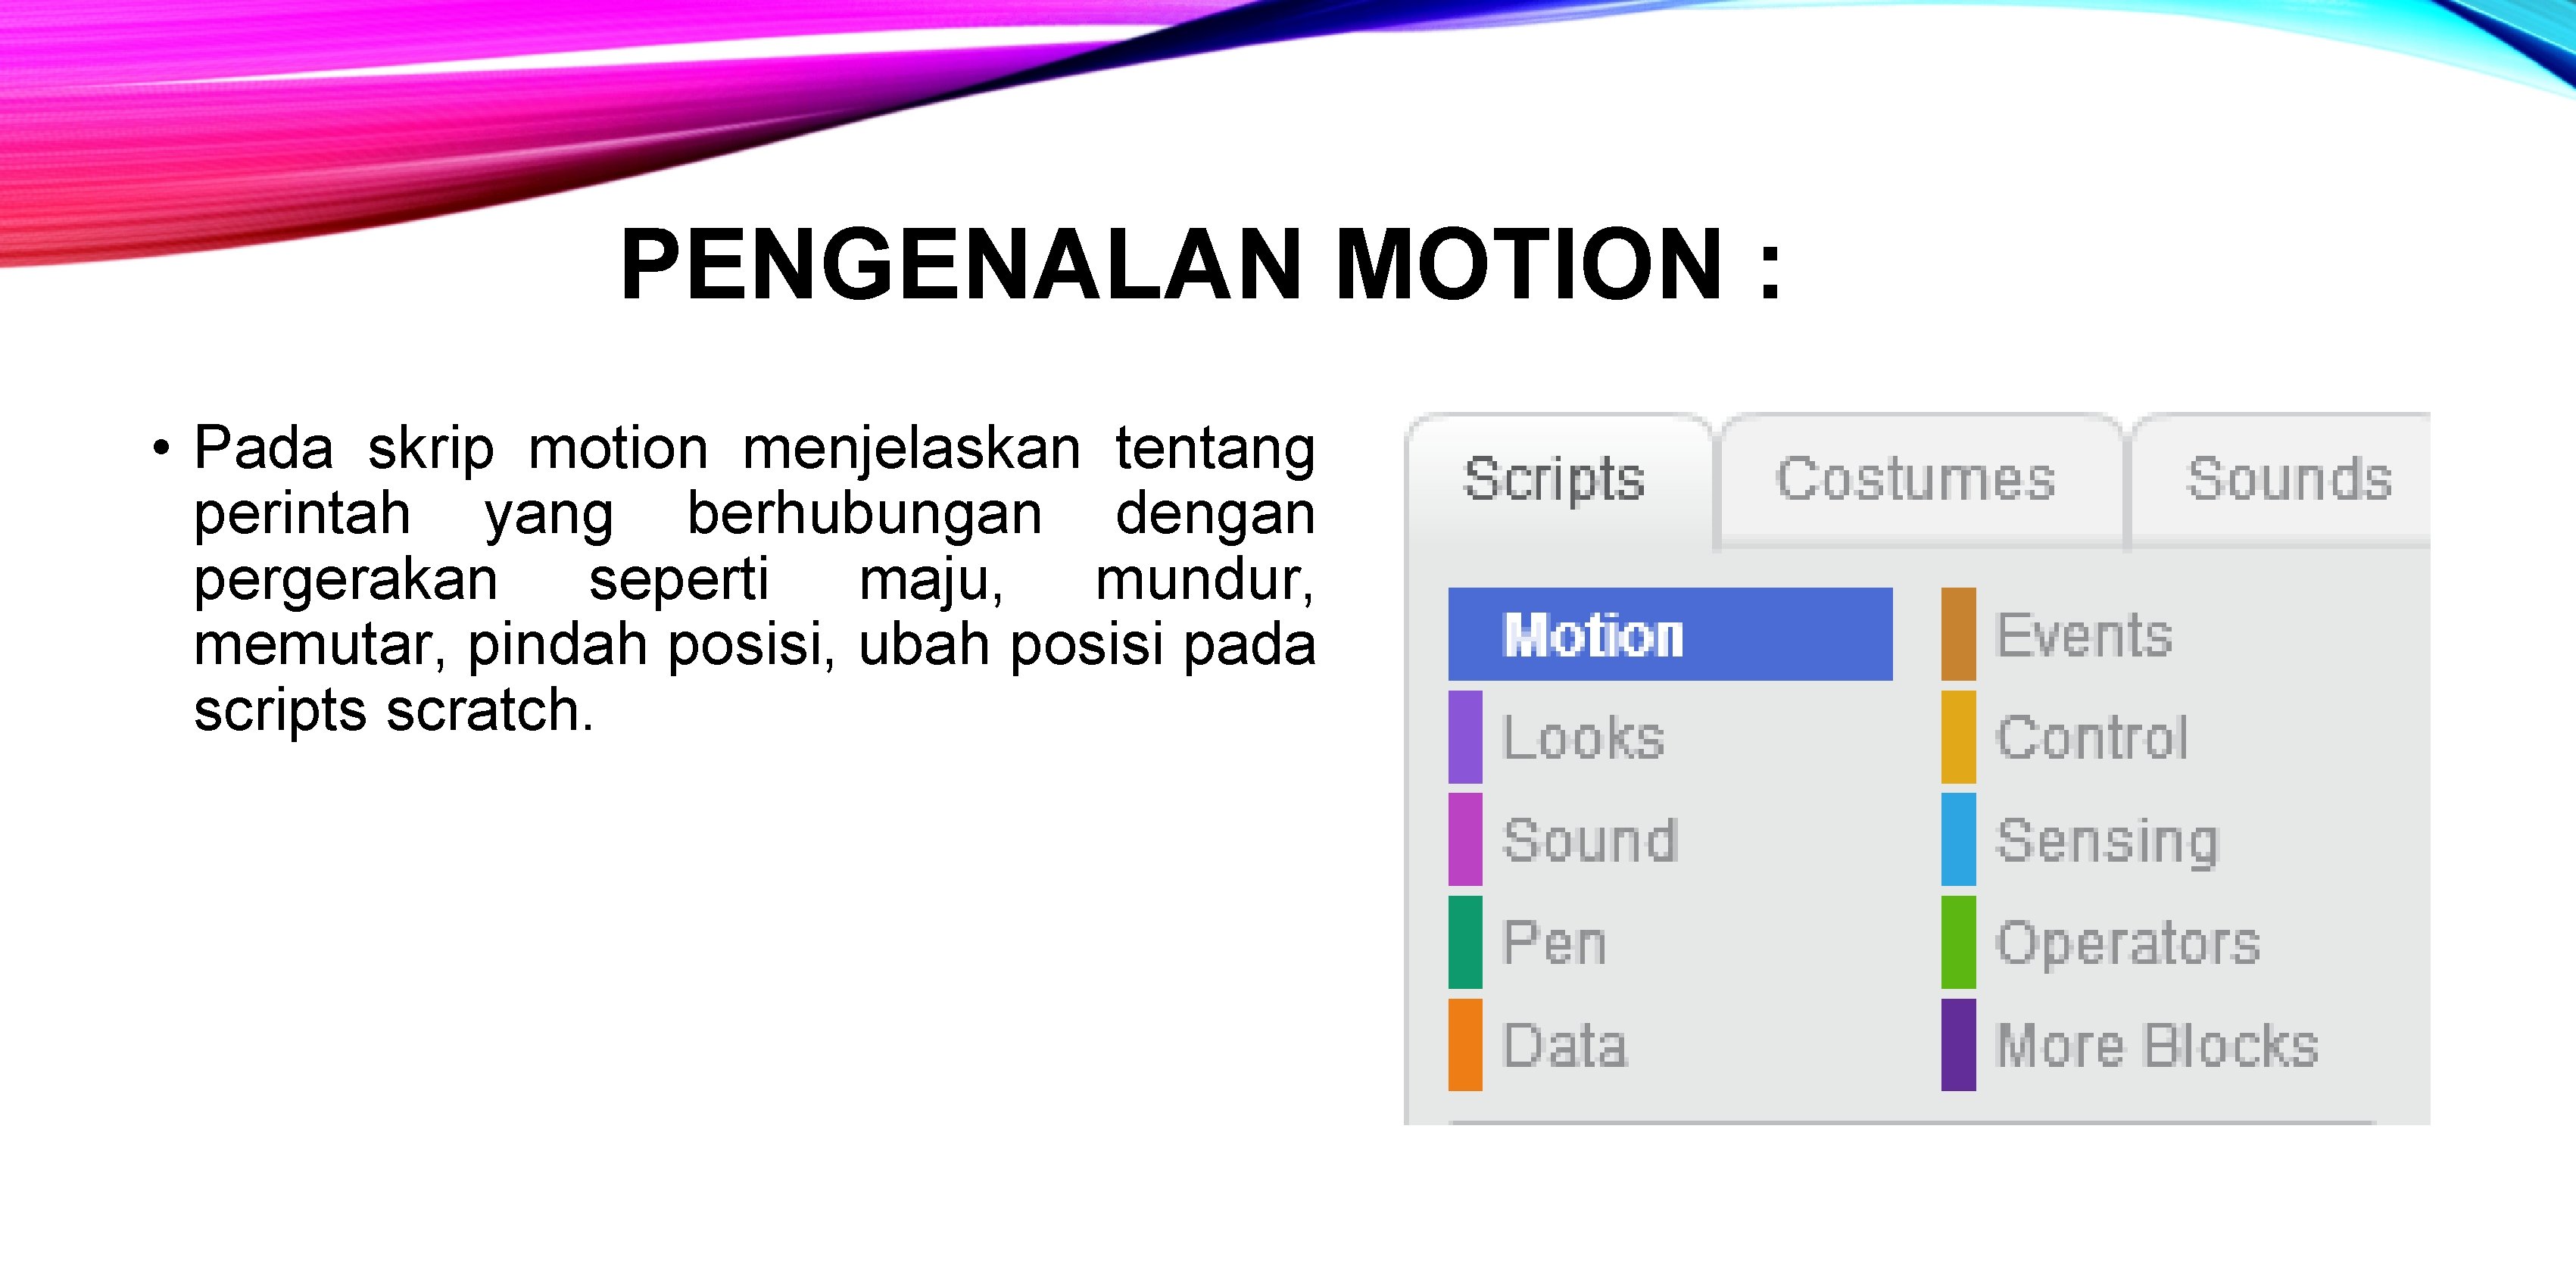 PENGENALAN MOTION : • Pada skrip motion menjelaskan tentang perintah yang berhubungan dengan pergerakan